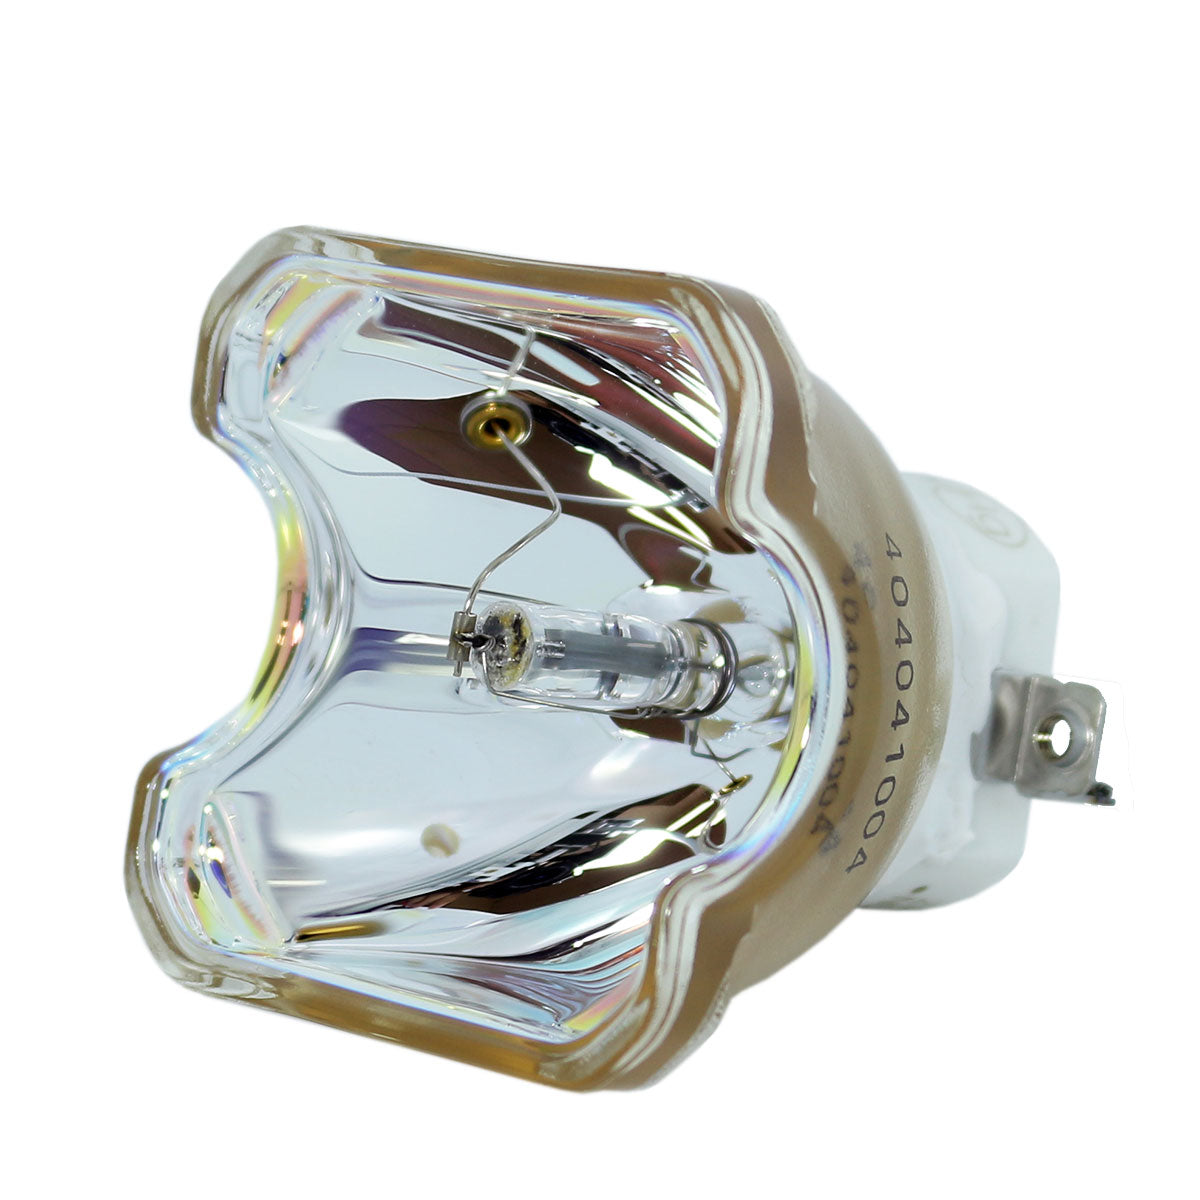 DreamVision R87600005 Ushio Projector Bare Lamp